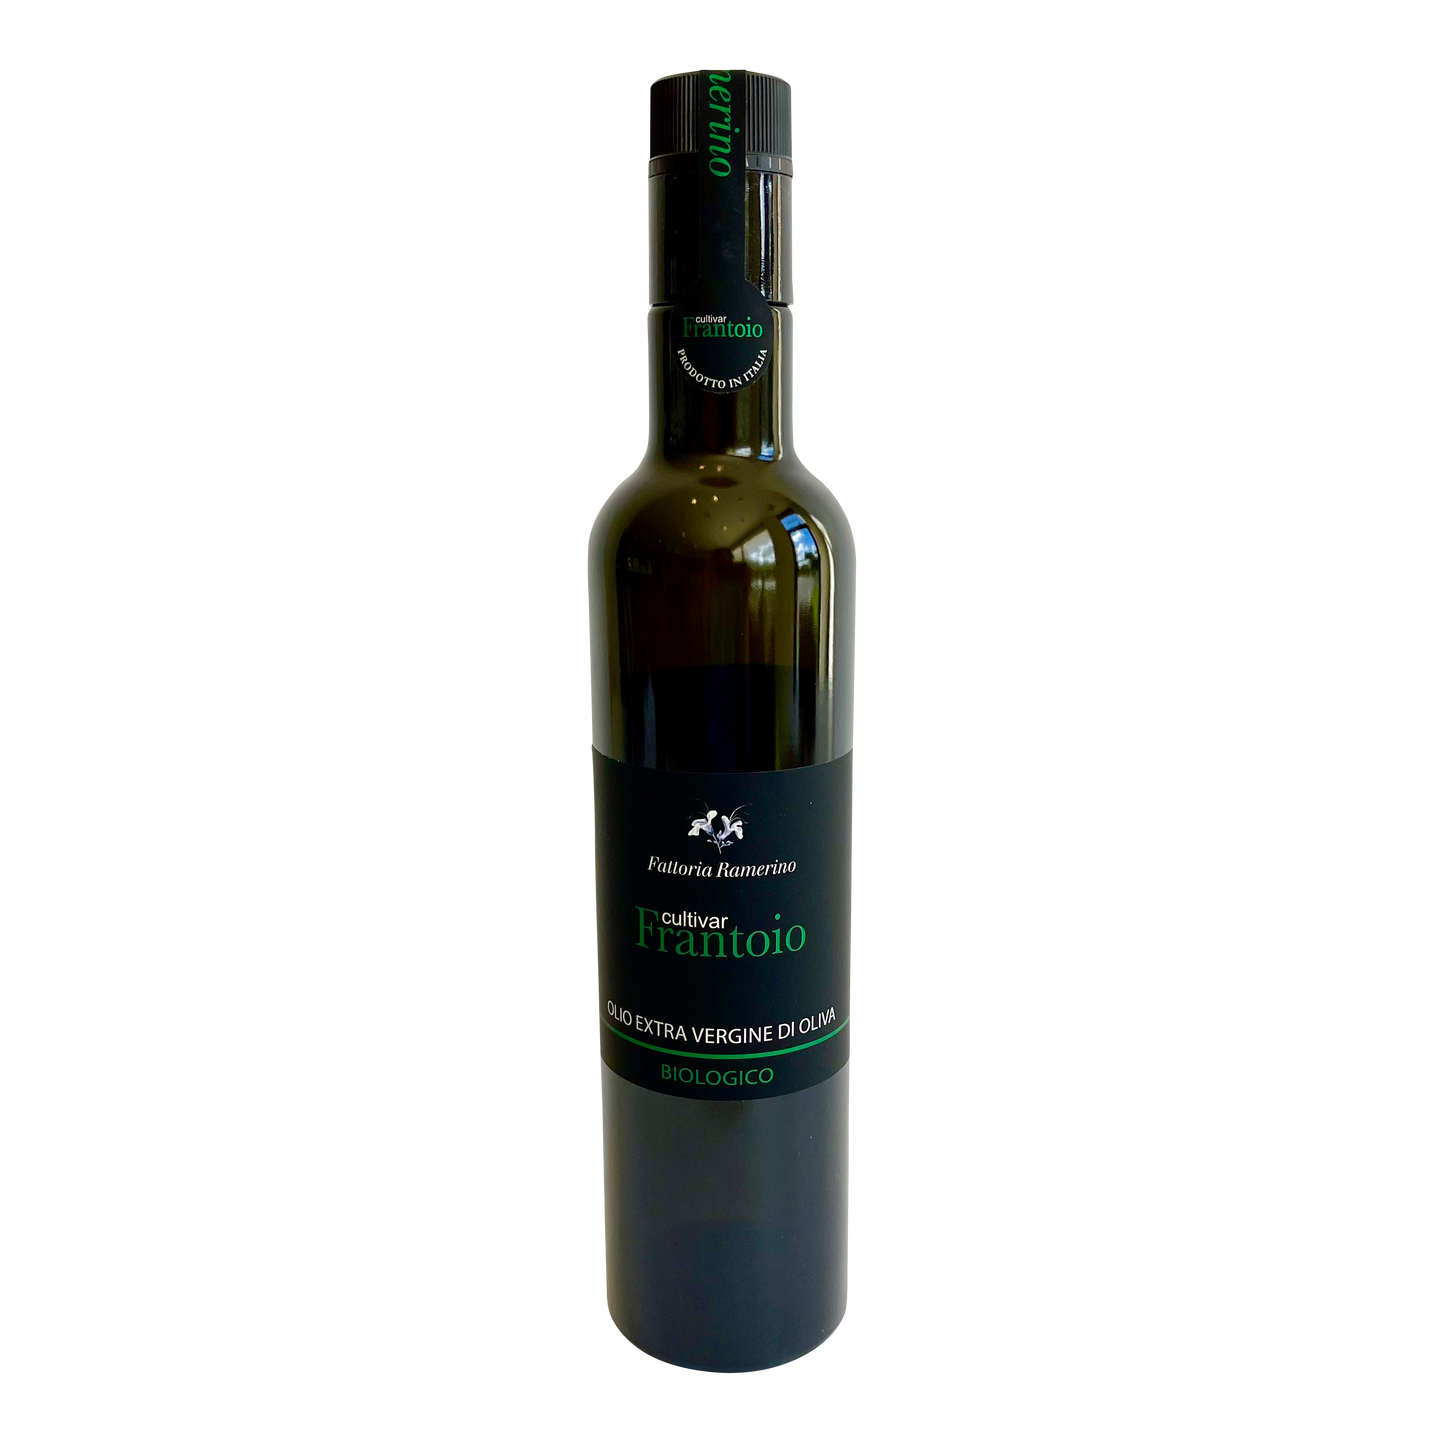 Fattoria Ramerino "Cultivar Frantoio" Extra Virgin Olive Oil 500ml RAM 045